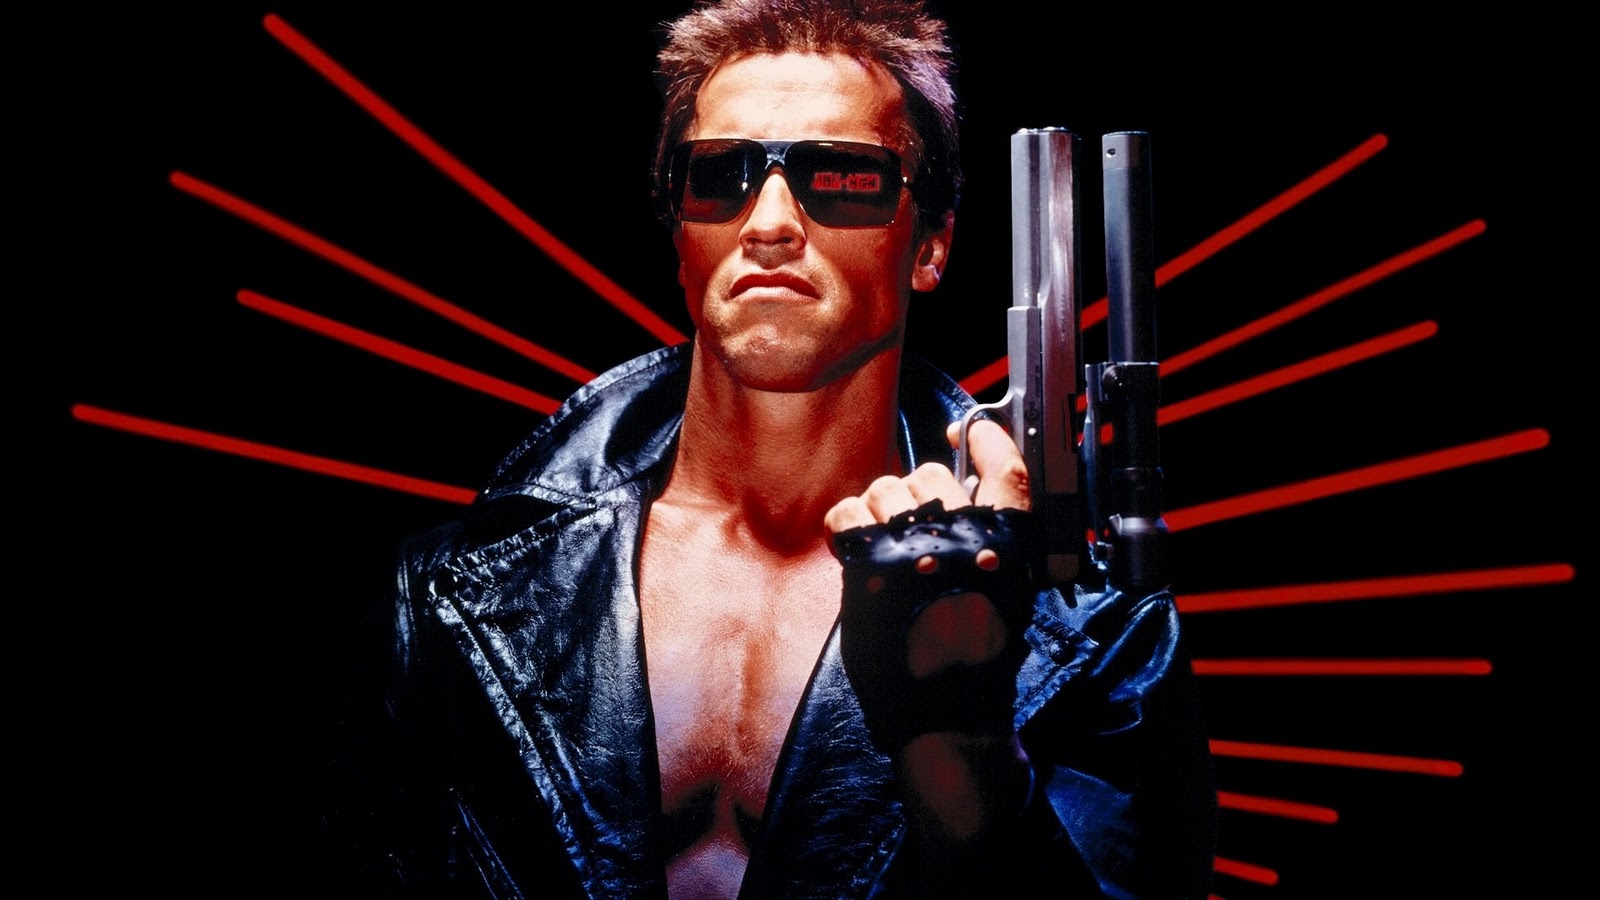 Terminator Backgrounds, Compatible - PC, Mobile, Gadgets| 1600x900 px